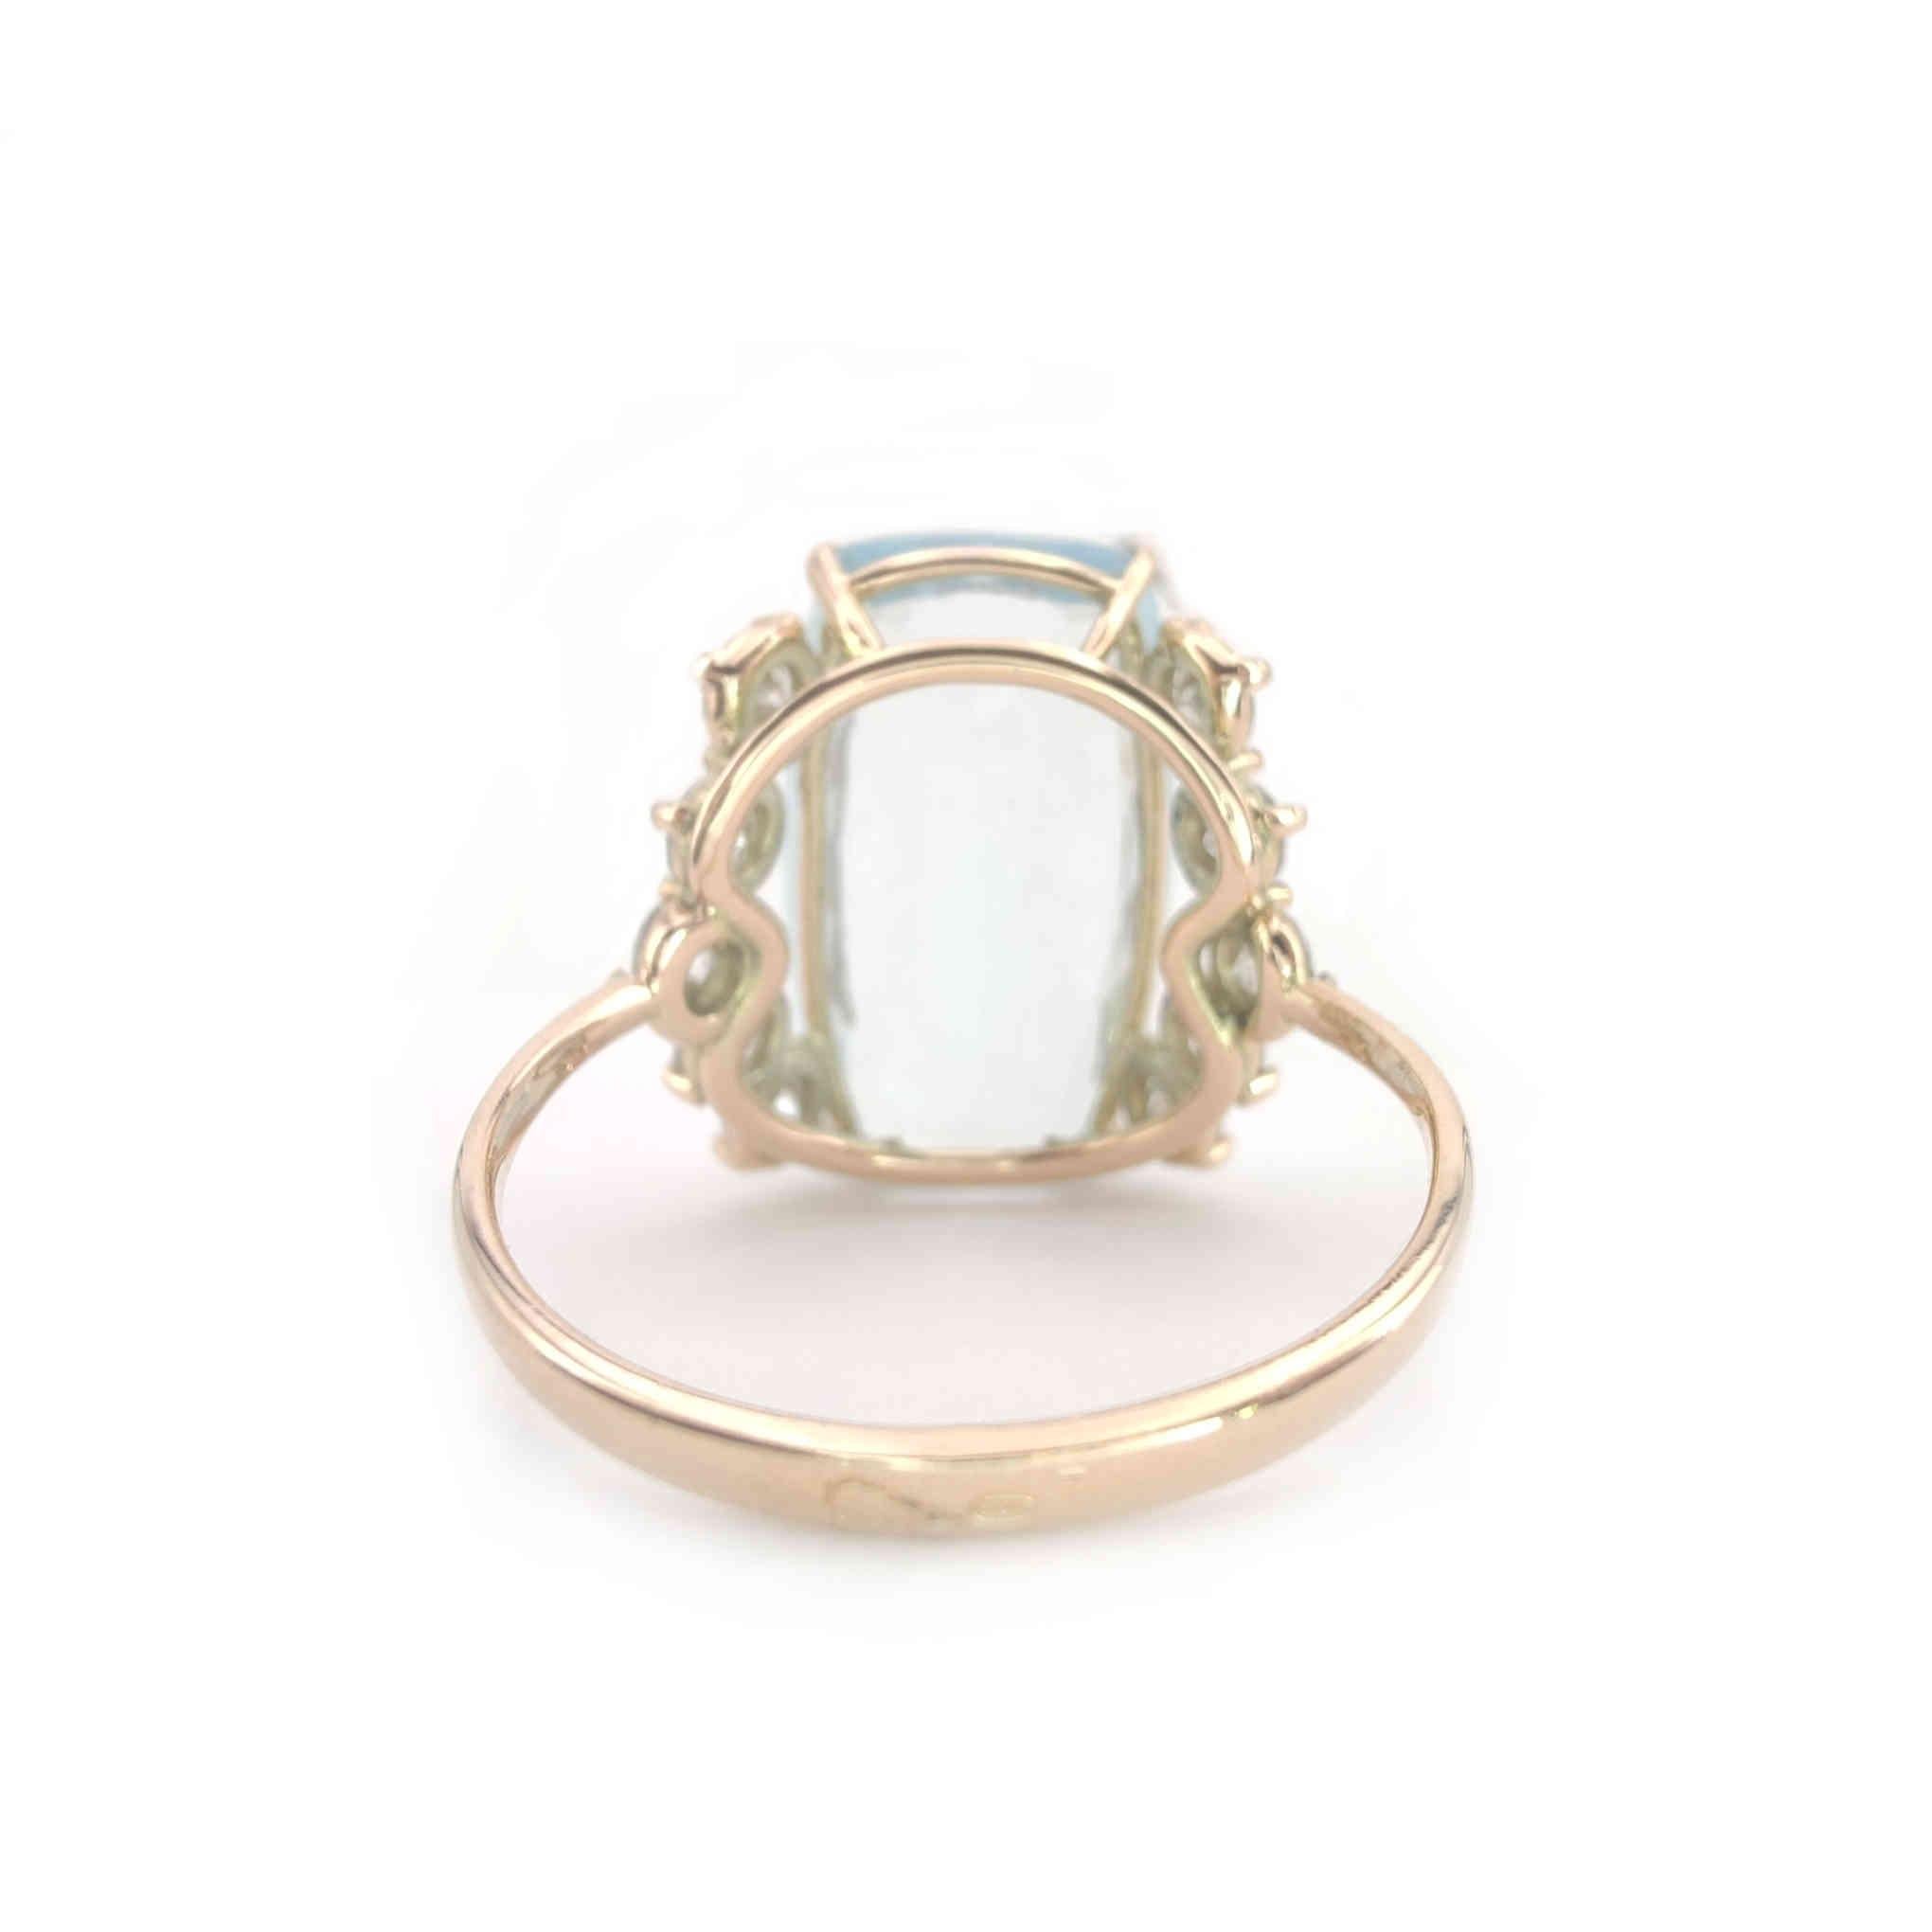  5.82 Carat Aquamarine & 0.66 carats Diamond 14K Ring - Handmade Sophistication Pour femmes 